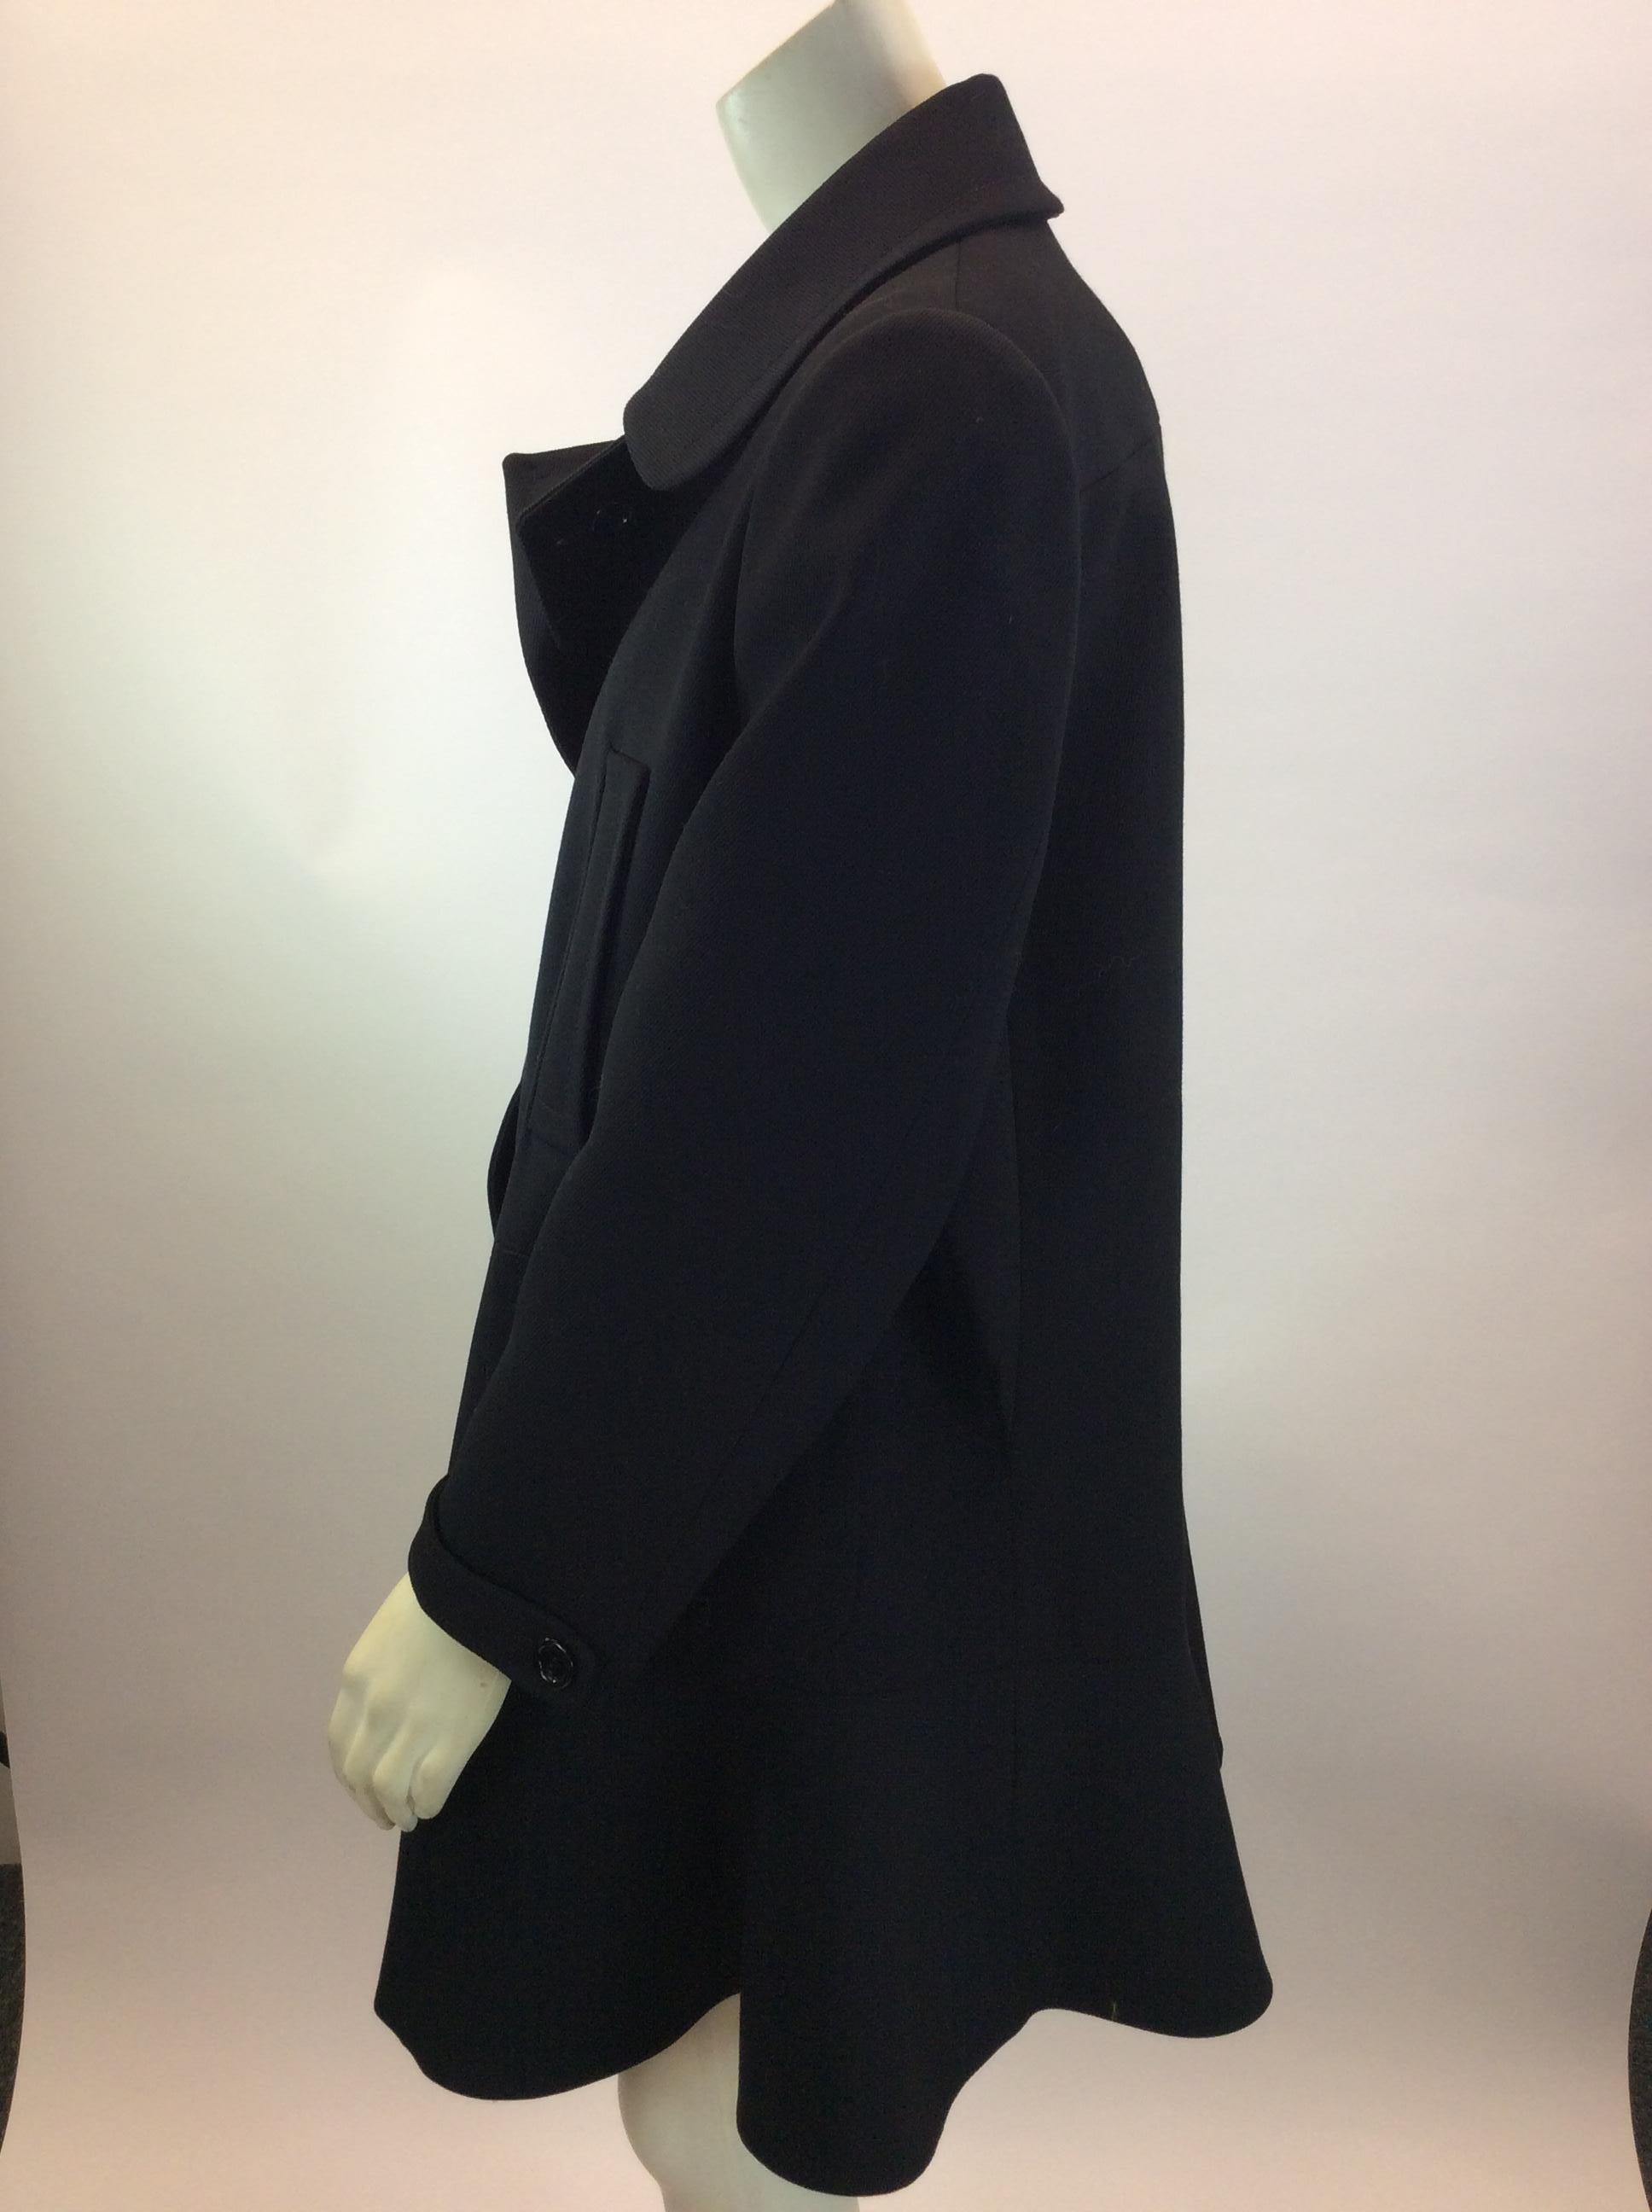 Miu Miu Black Wool Coat
$899
Made in Italy
100% Wool
Size 48
Length 33”
Bust 49”
Waist 47”